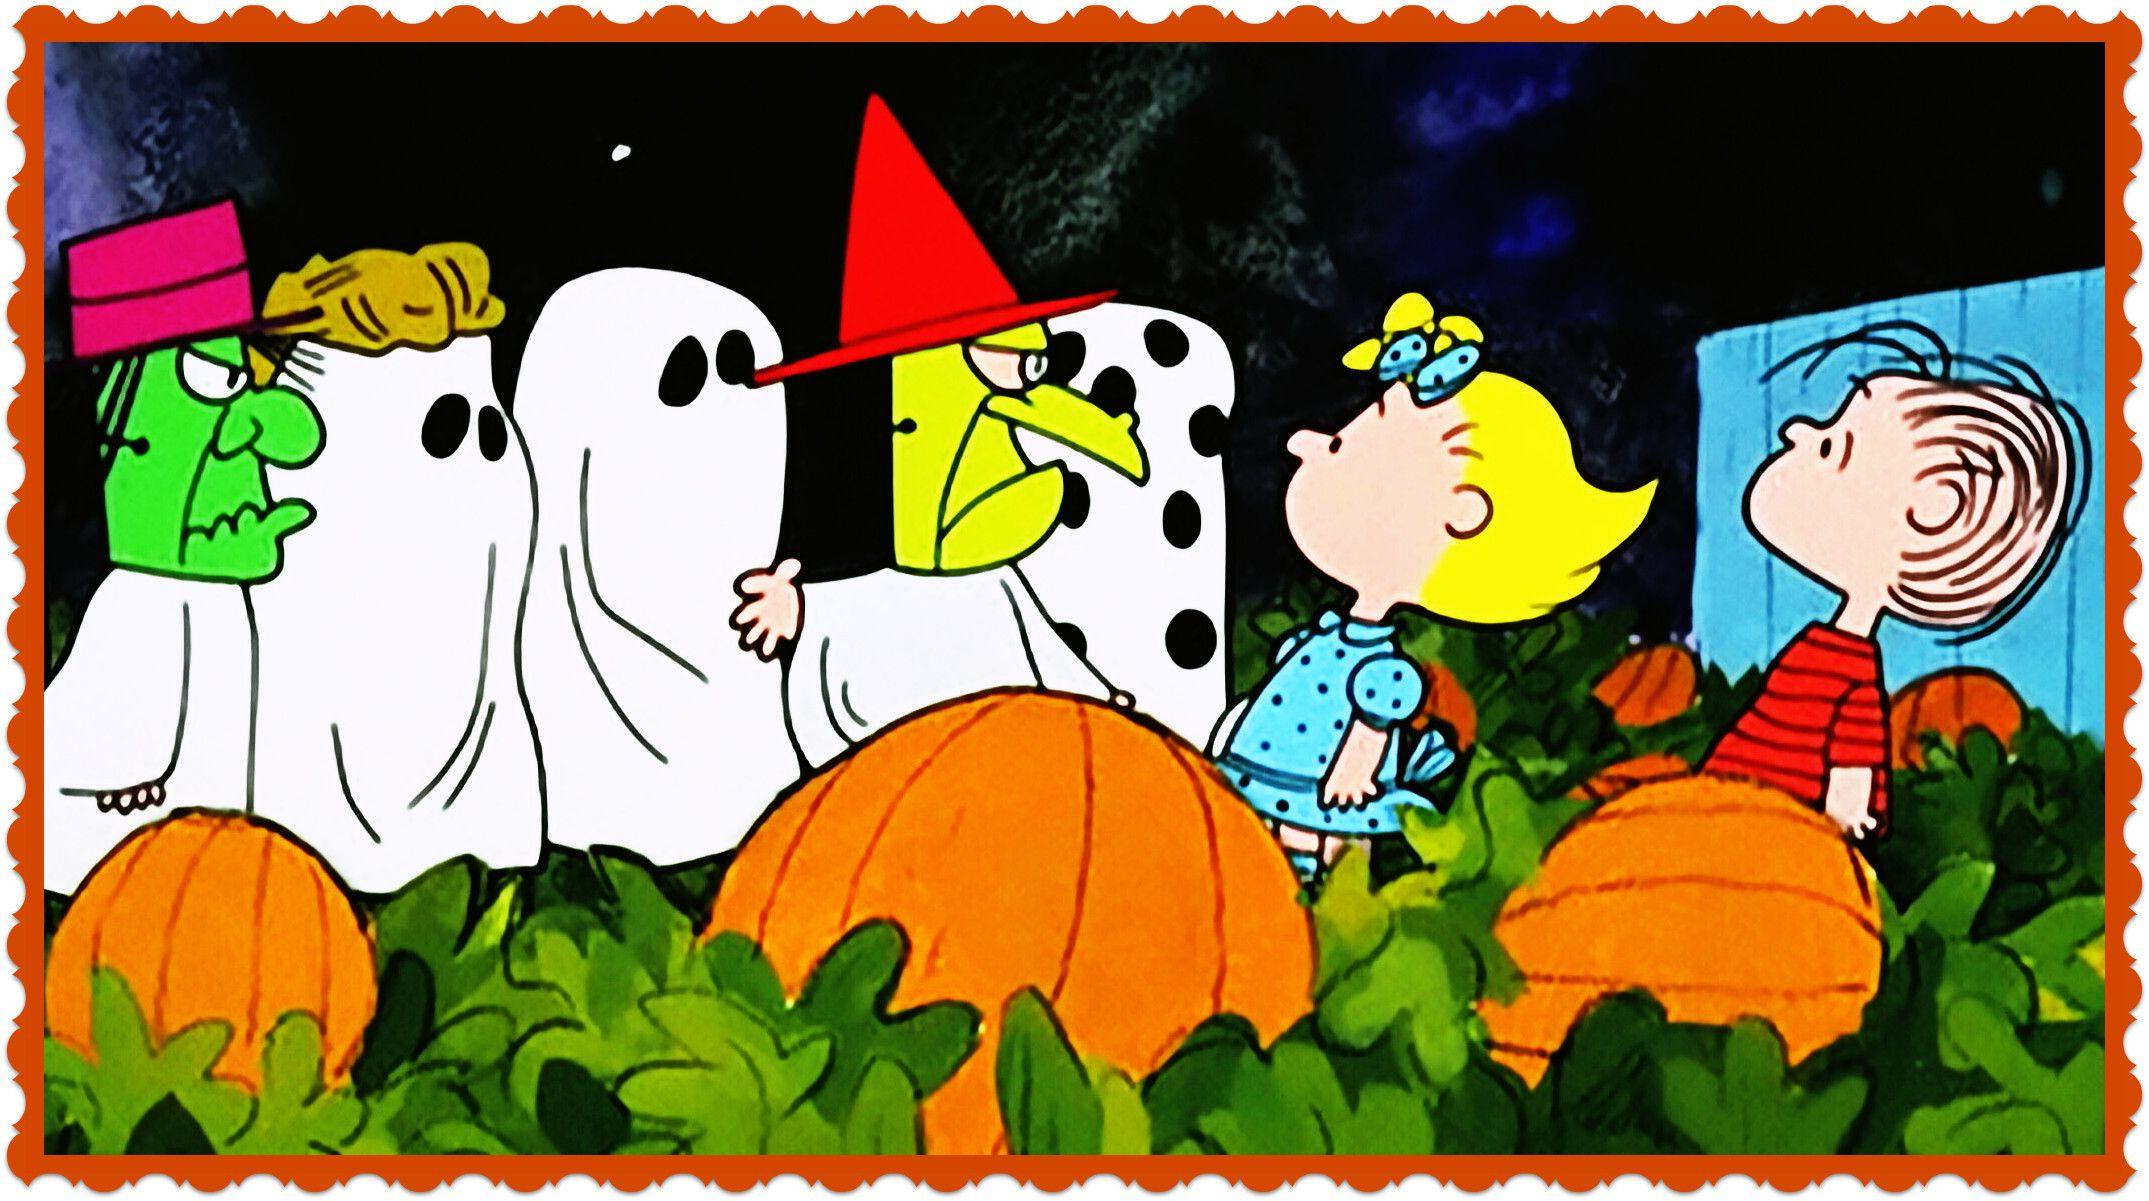 Great Pumpkin Charlie Brown Wallpaper 51 images